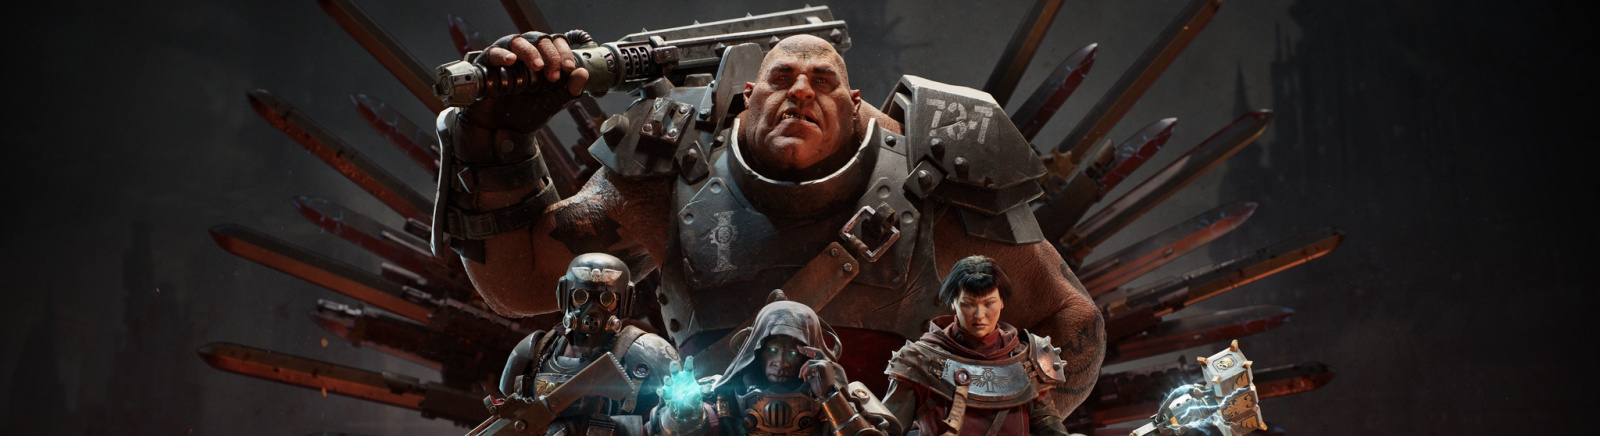 Дата выхода Warhammer 40,000: Darktide  на PC и Xbox Series X/S в России и во всем мире